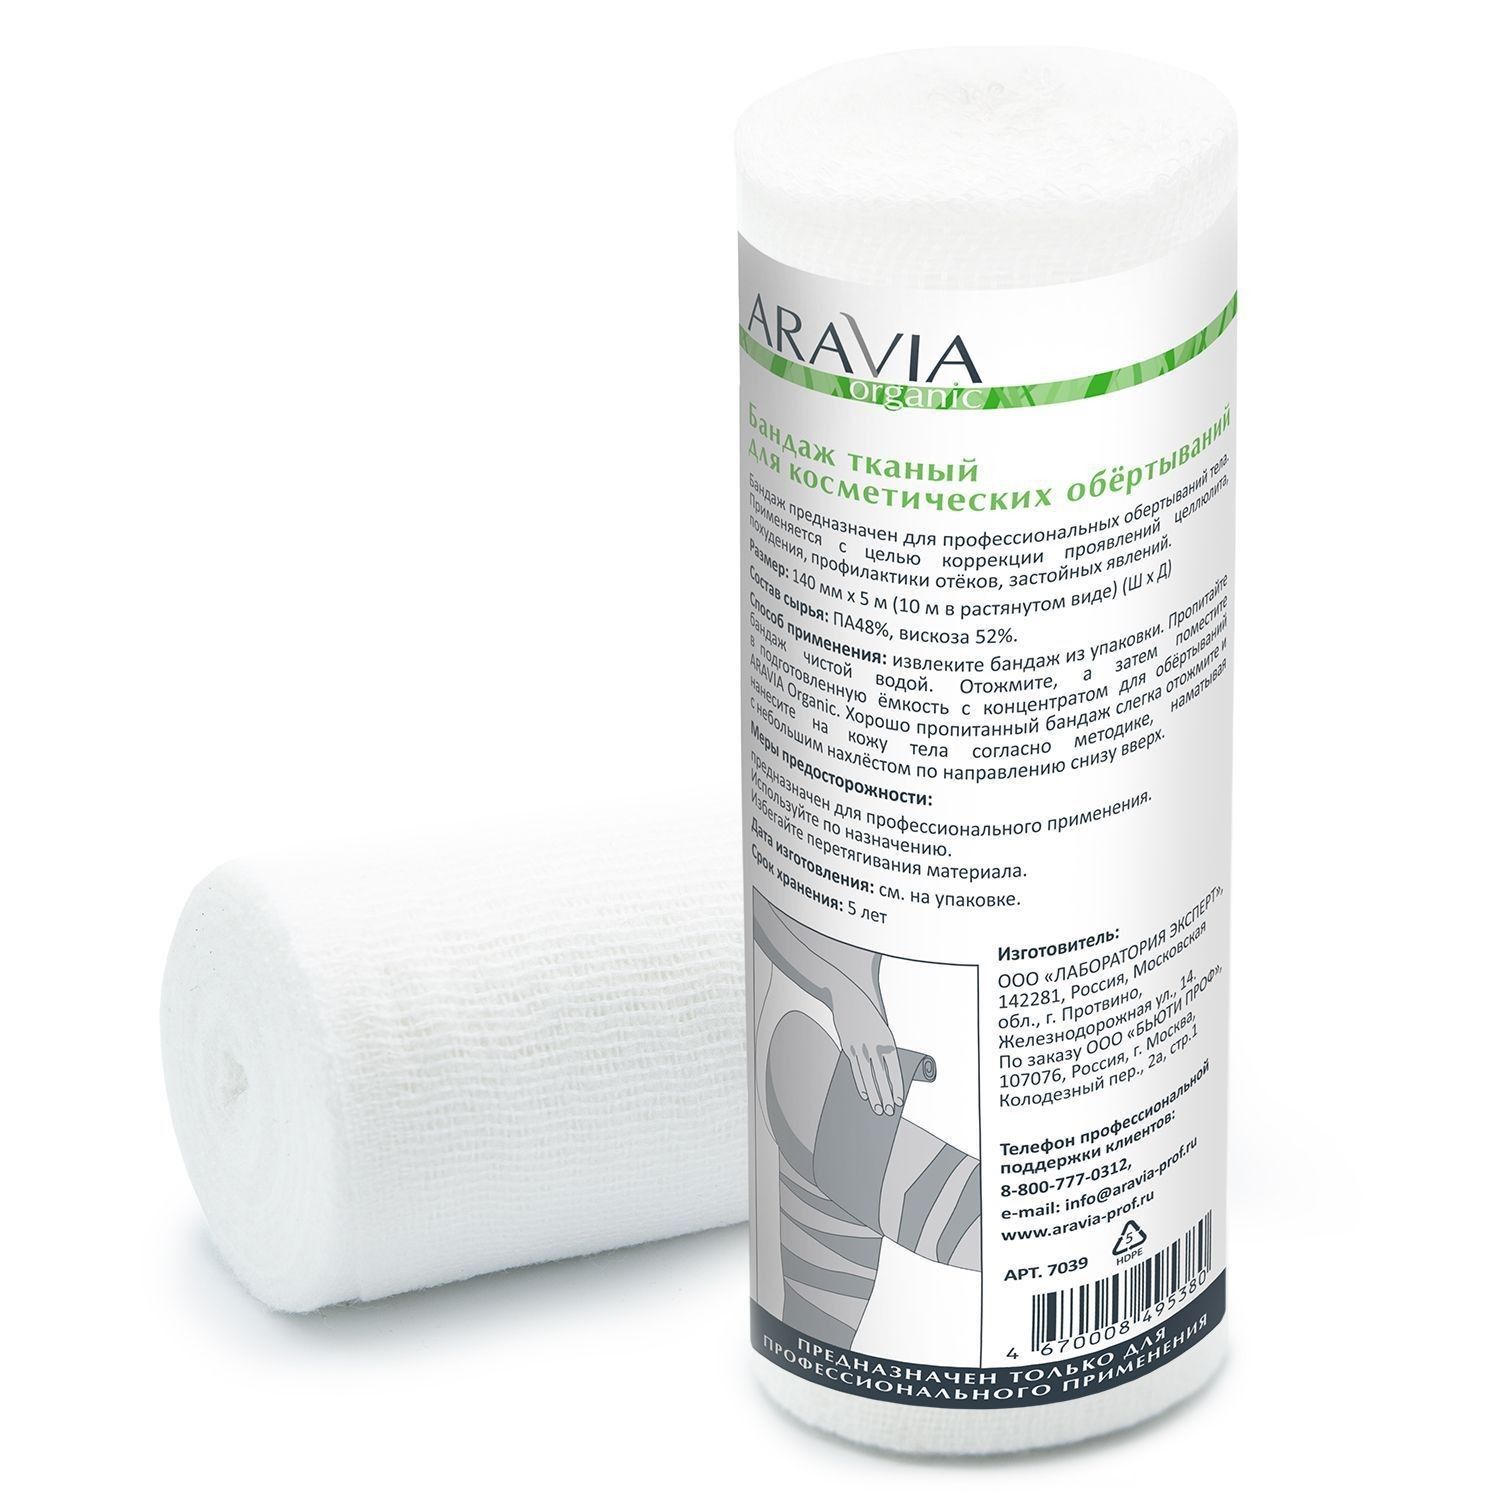 Бандаж для косметических обертываний Aravia Professional тканный 14 см x 10 м aravia бандаж тканный для косметических обертываний organiс 10 см 10 м